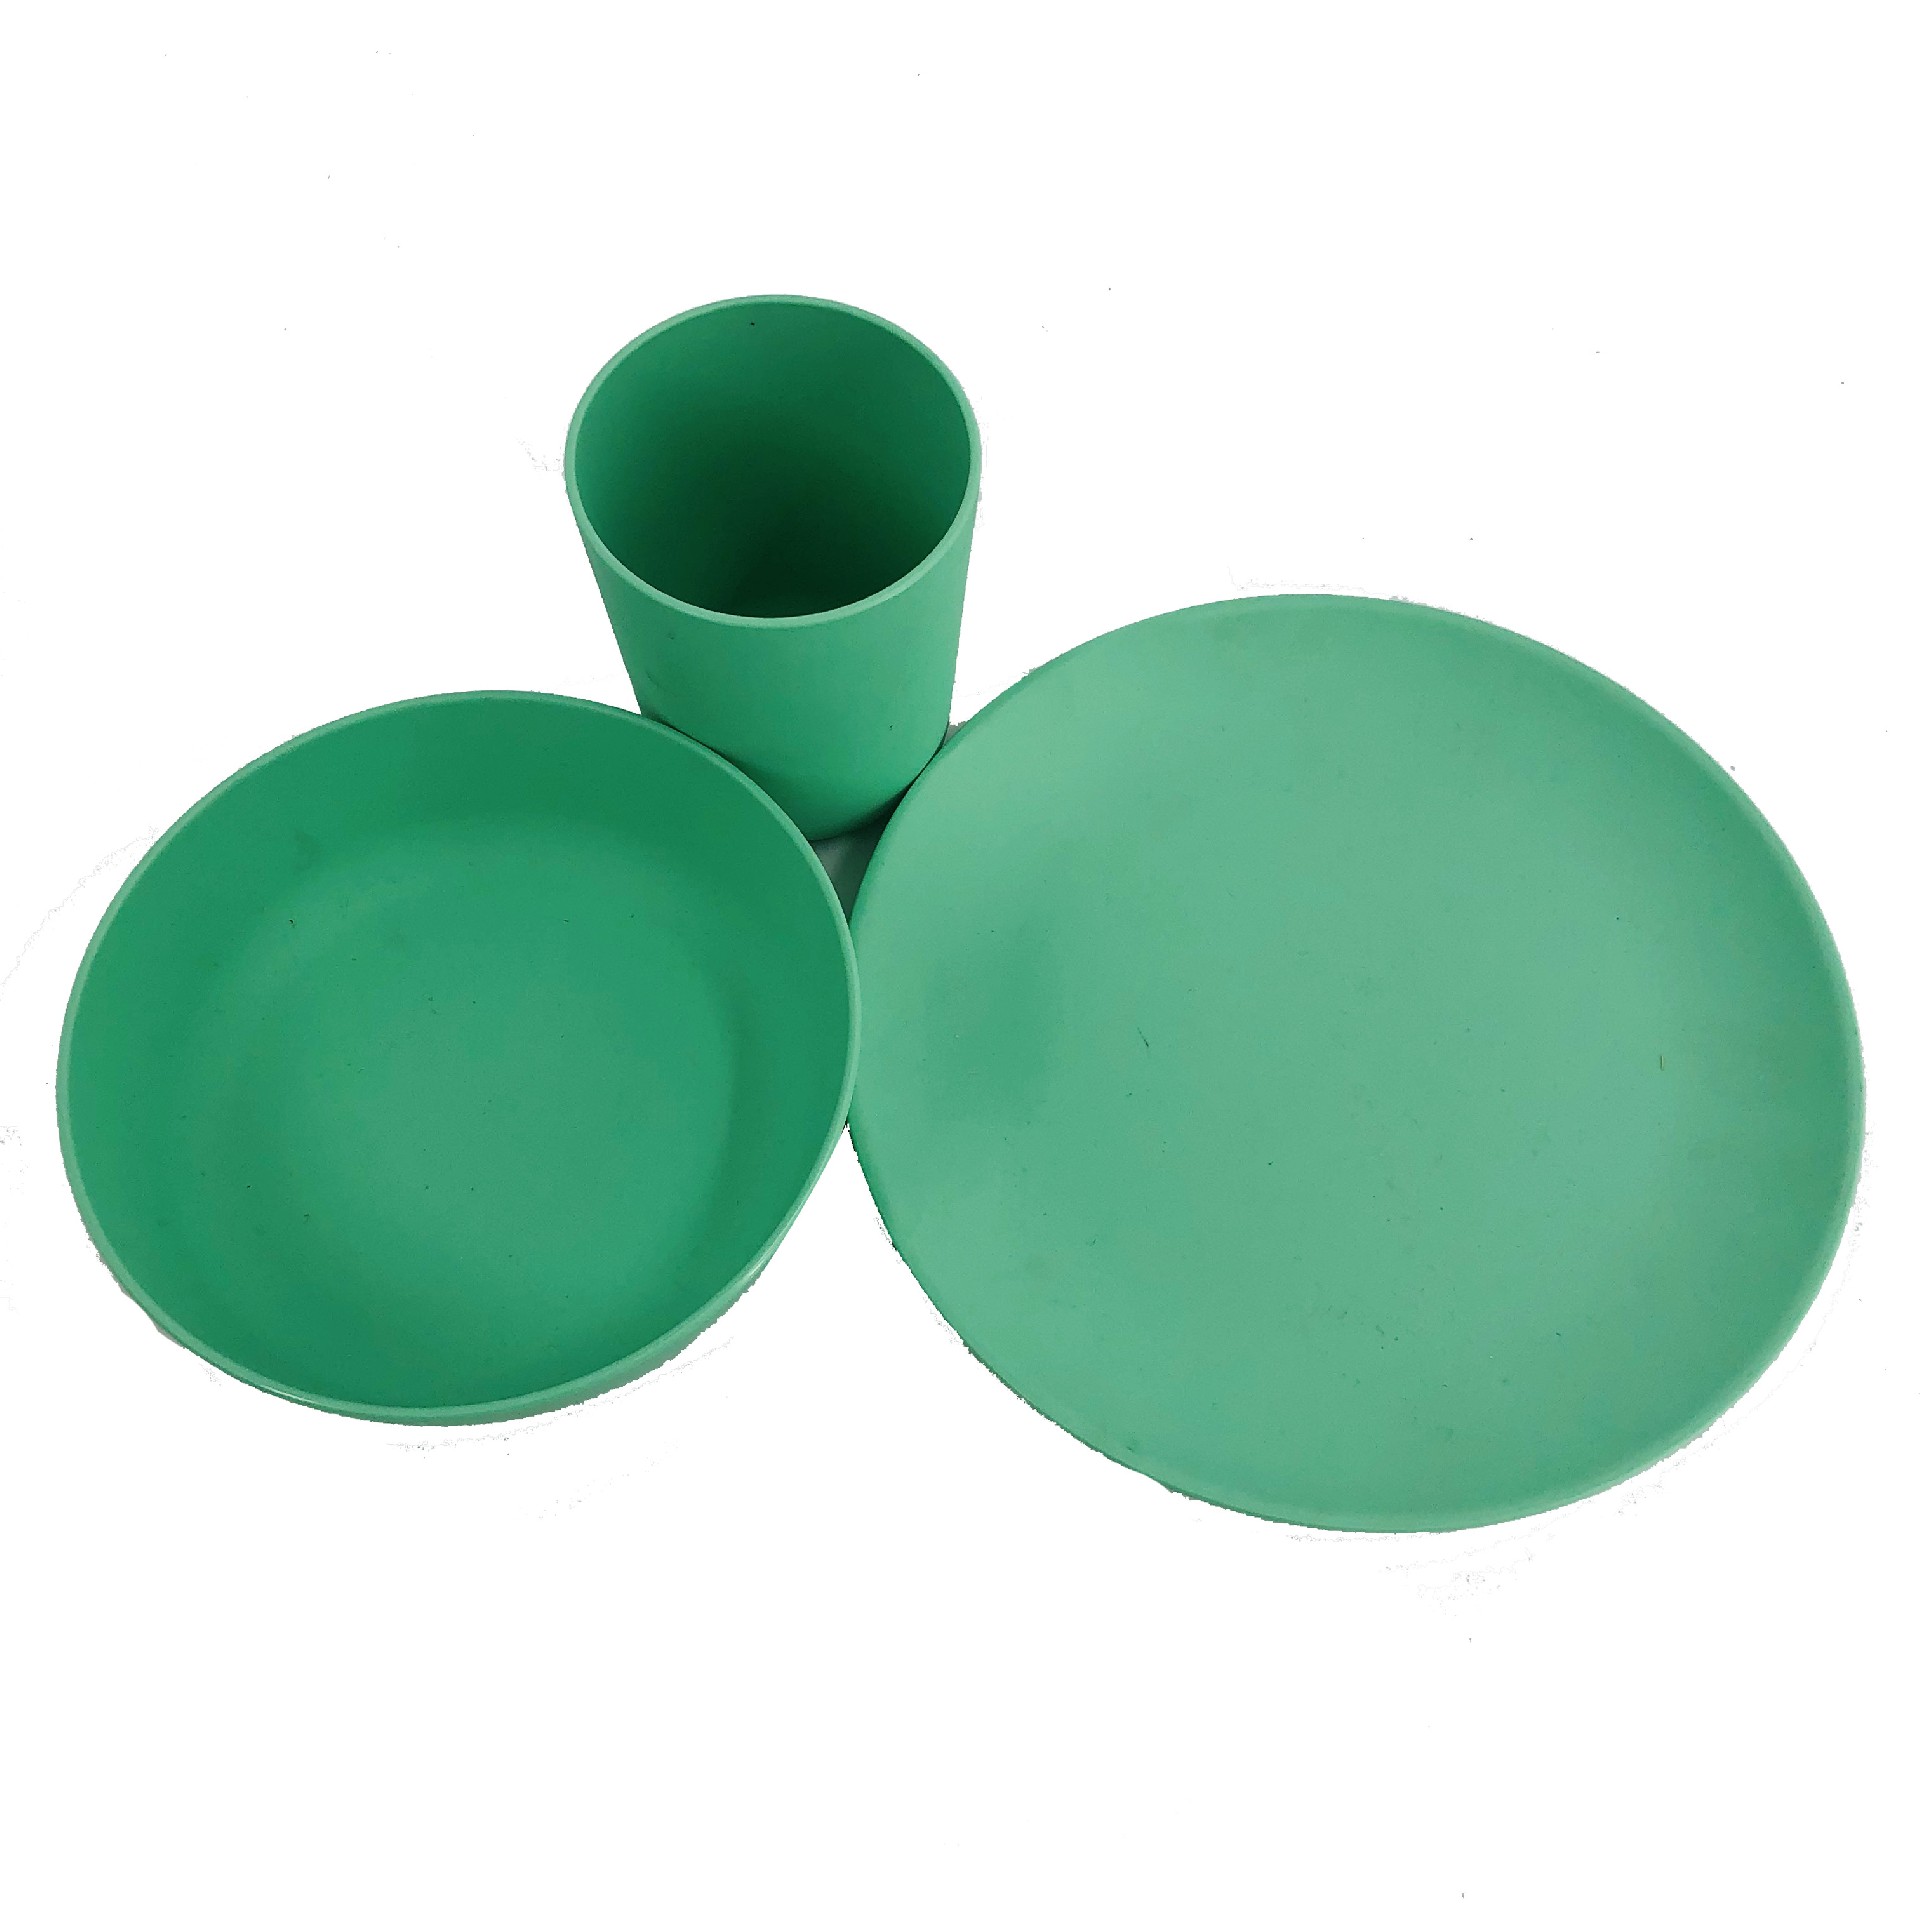 Customized sustainable pla 100% biodegradable bamboo fiber dinnerware party kids tableware set